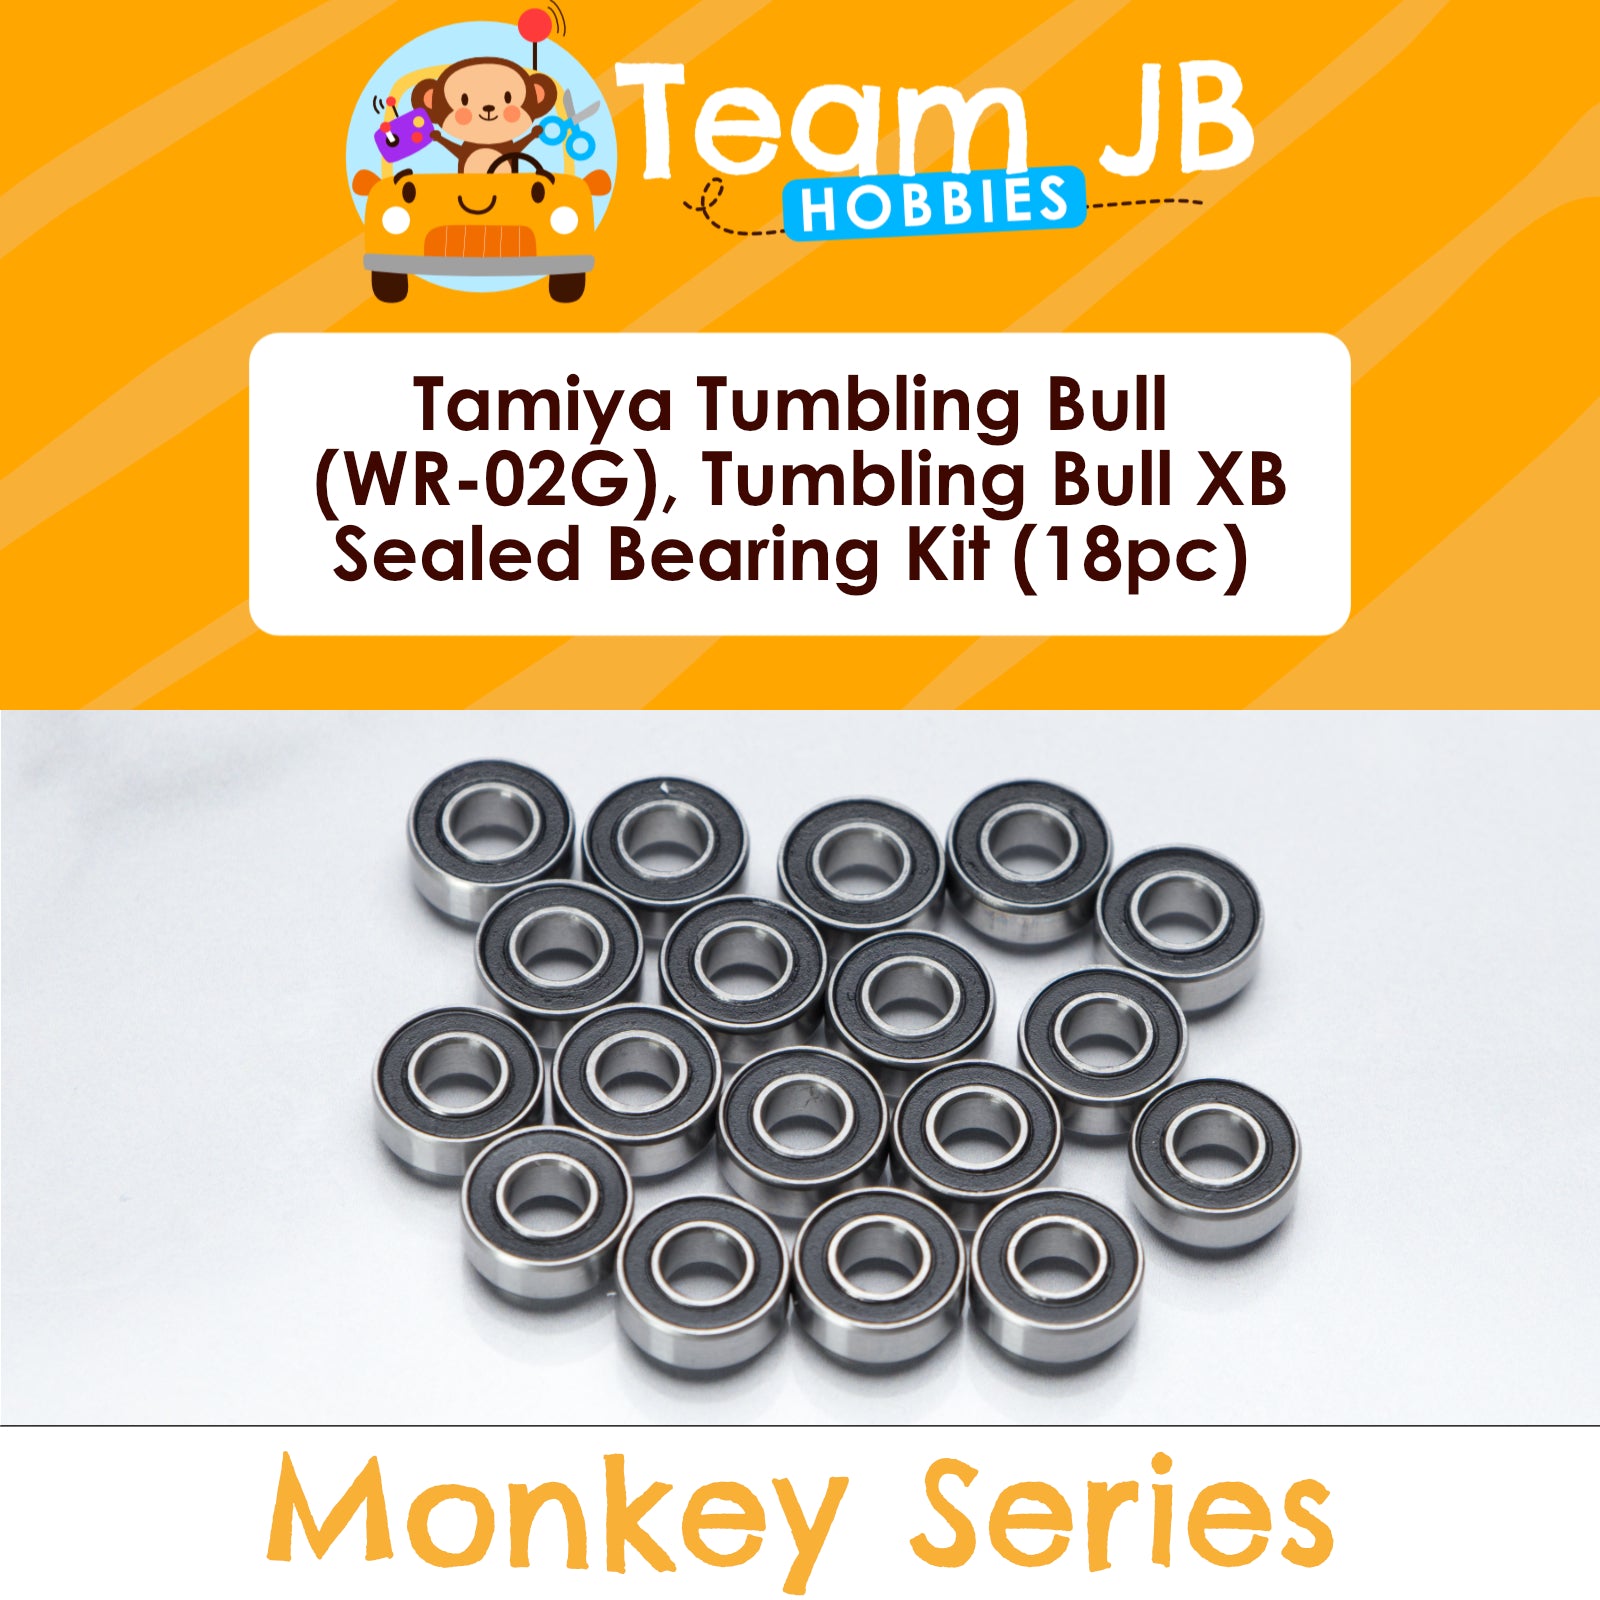 Tamiya Tumbling Bull (WR-02G), Tumbling Bull XB - Sealed Bearing Kit